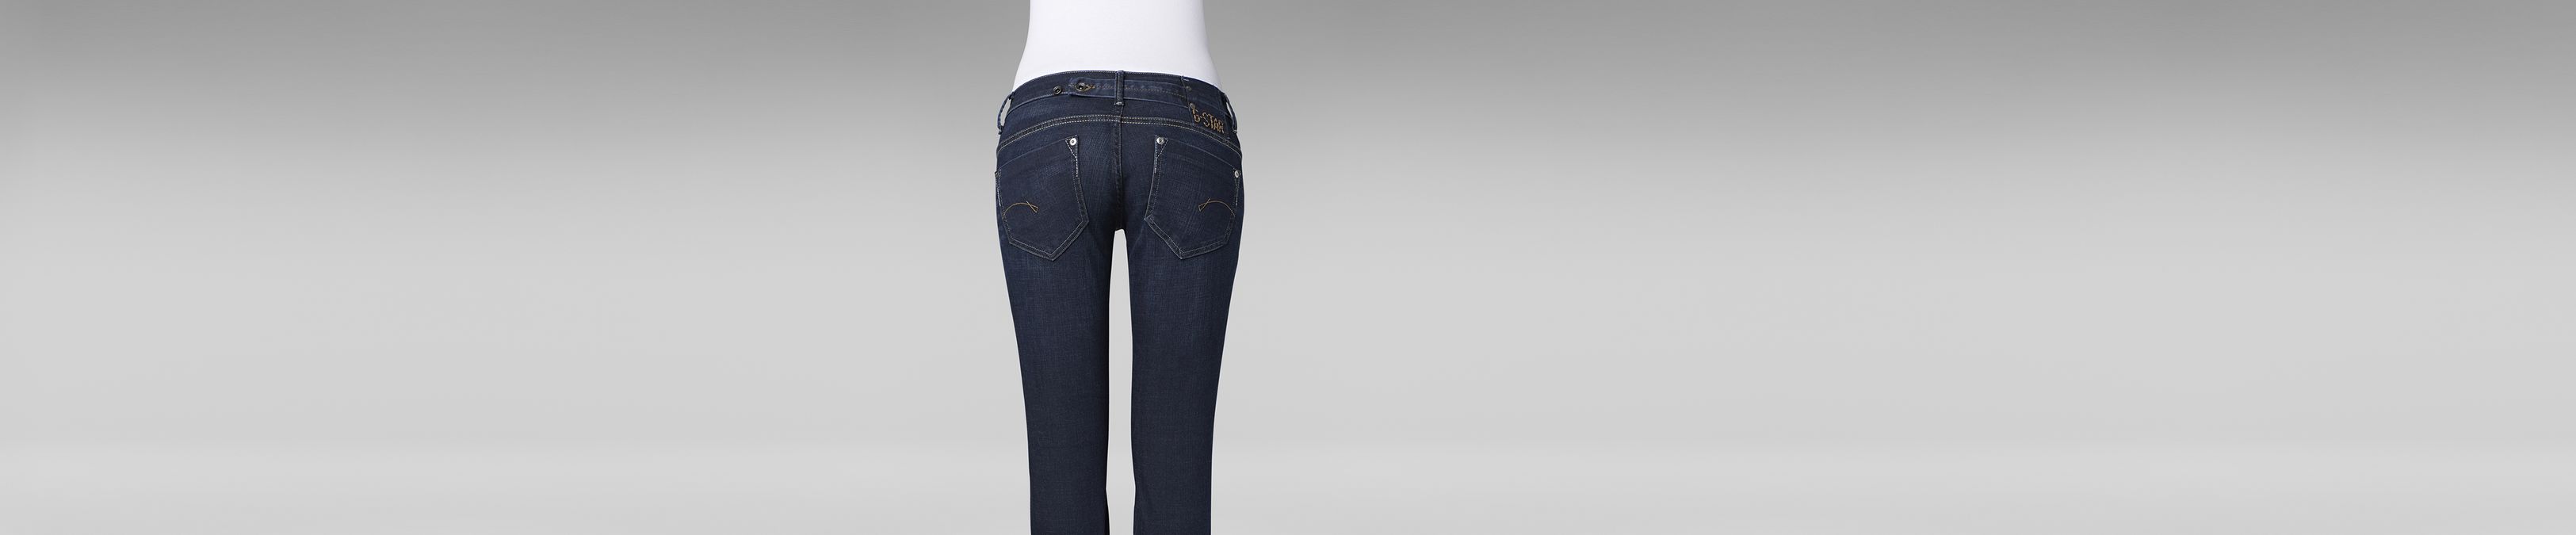 g star midge straight women's jeans